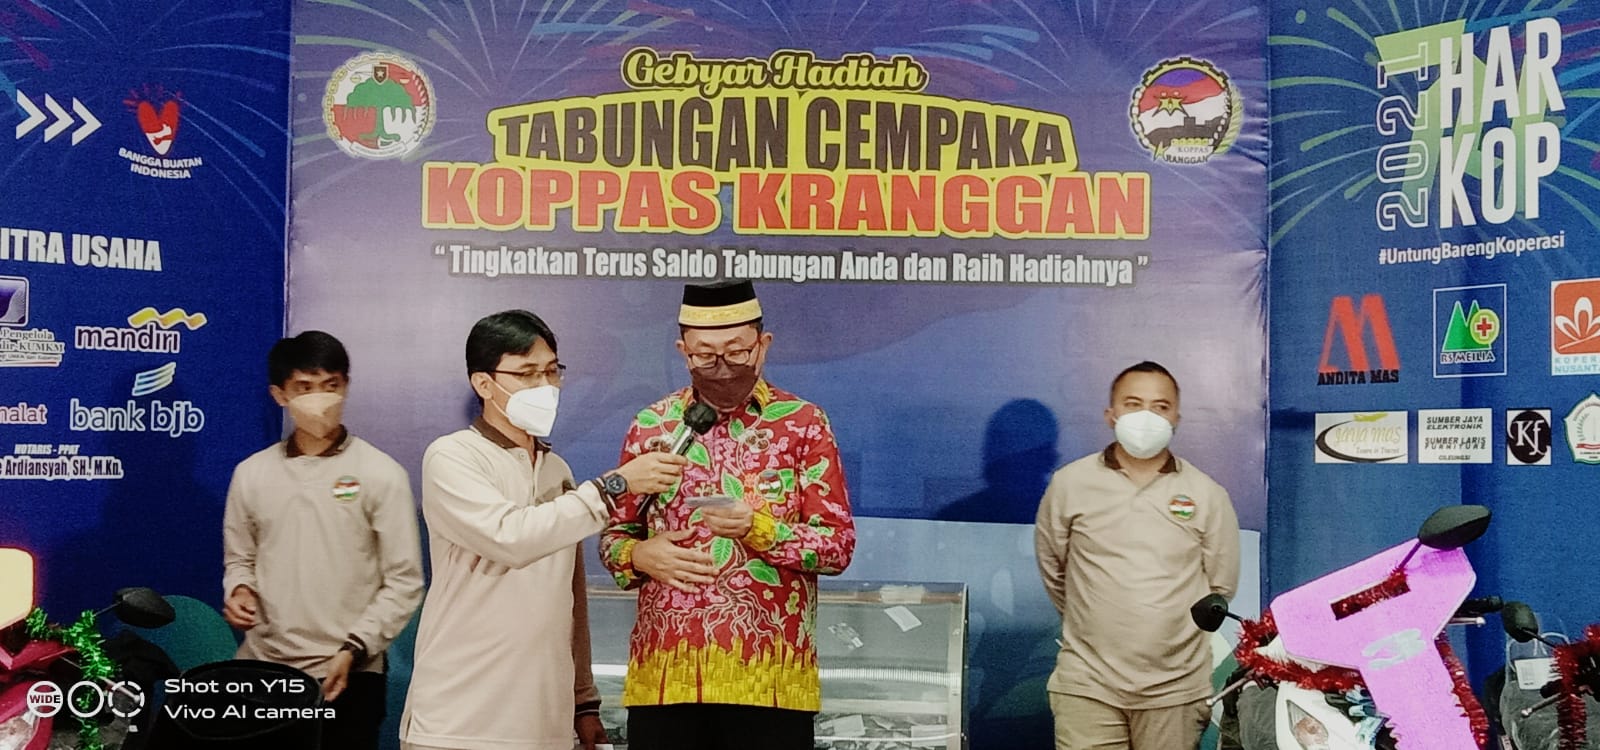 Ketua Koppas Kranggan Anim Imamuddin membacakan nomor undian pemenang